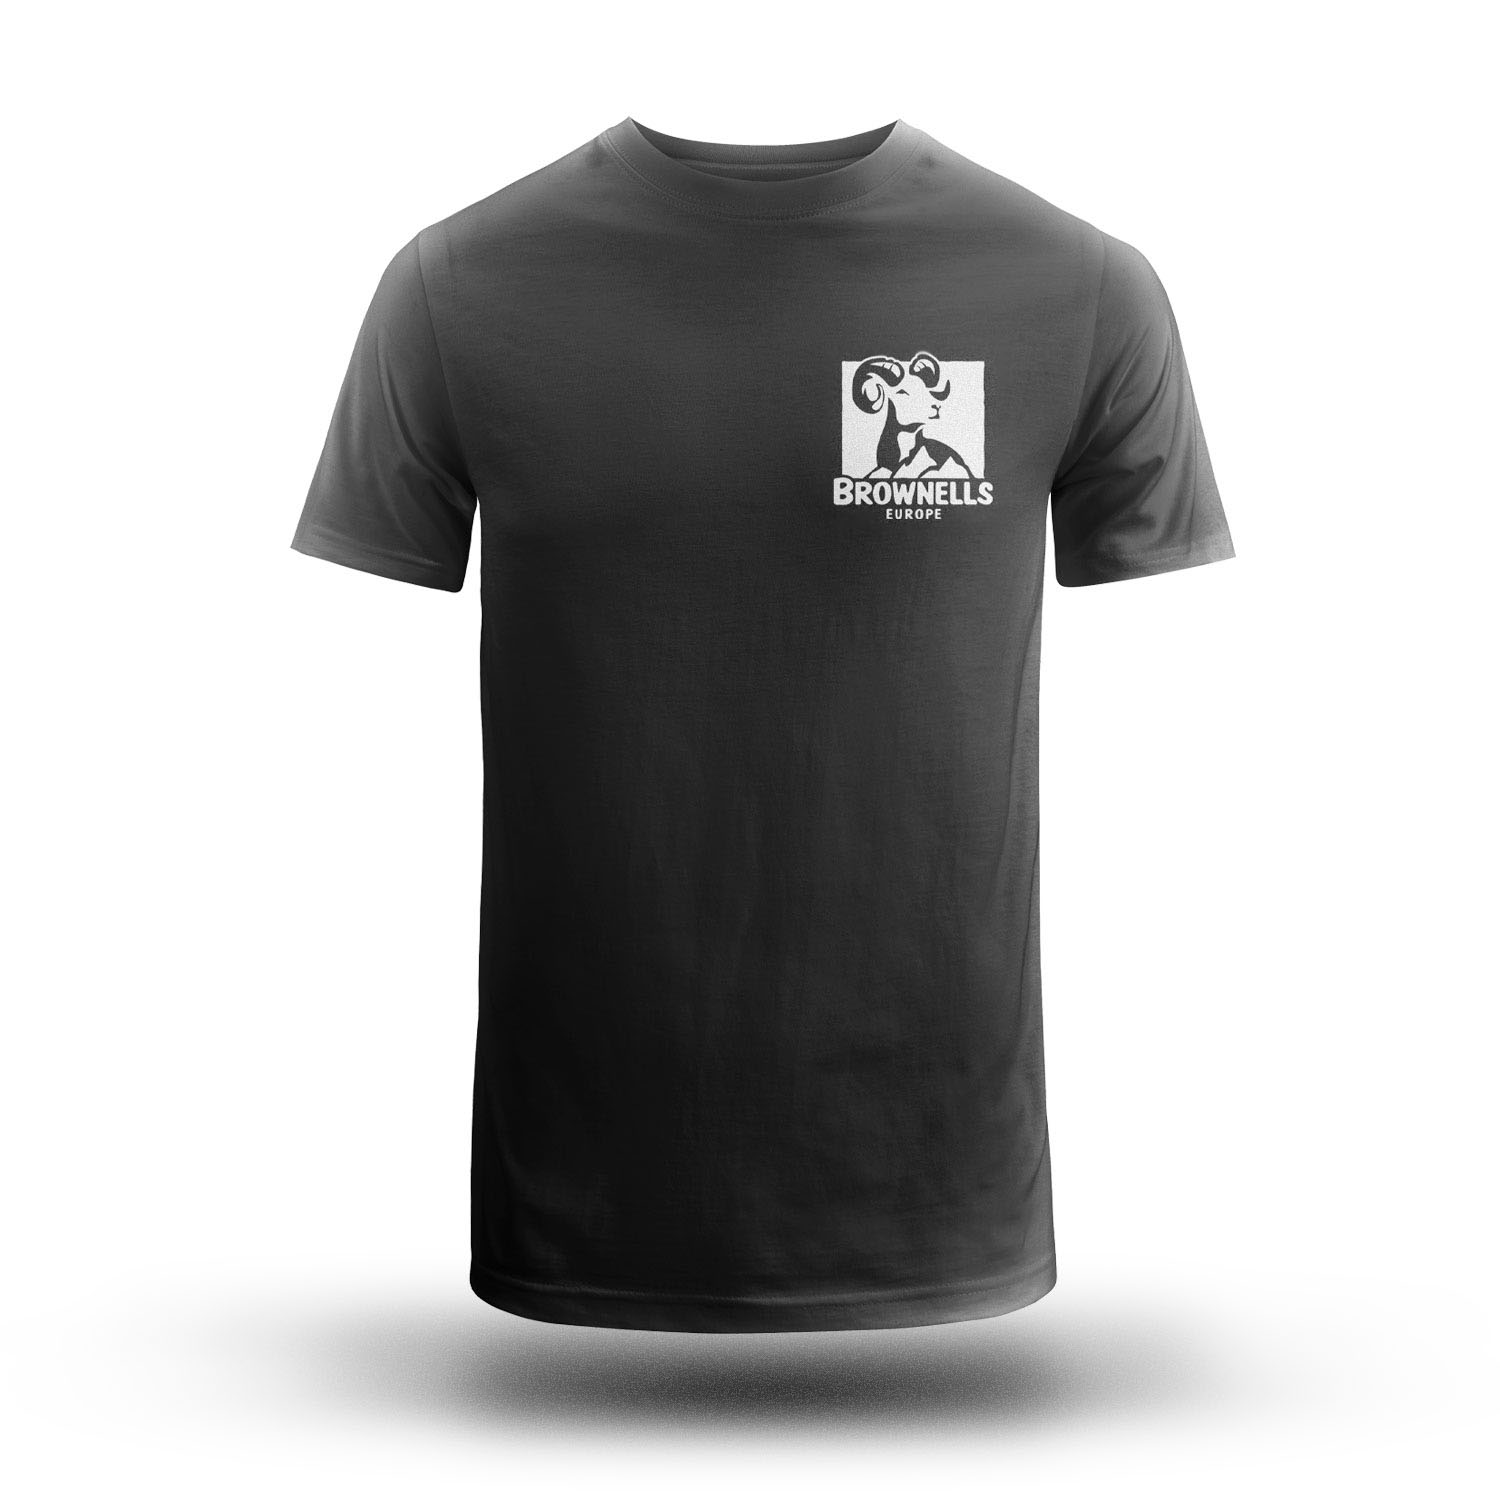 Brownells Europe T-Shirts - Unisex - XS